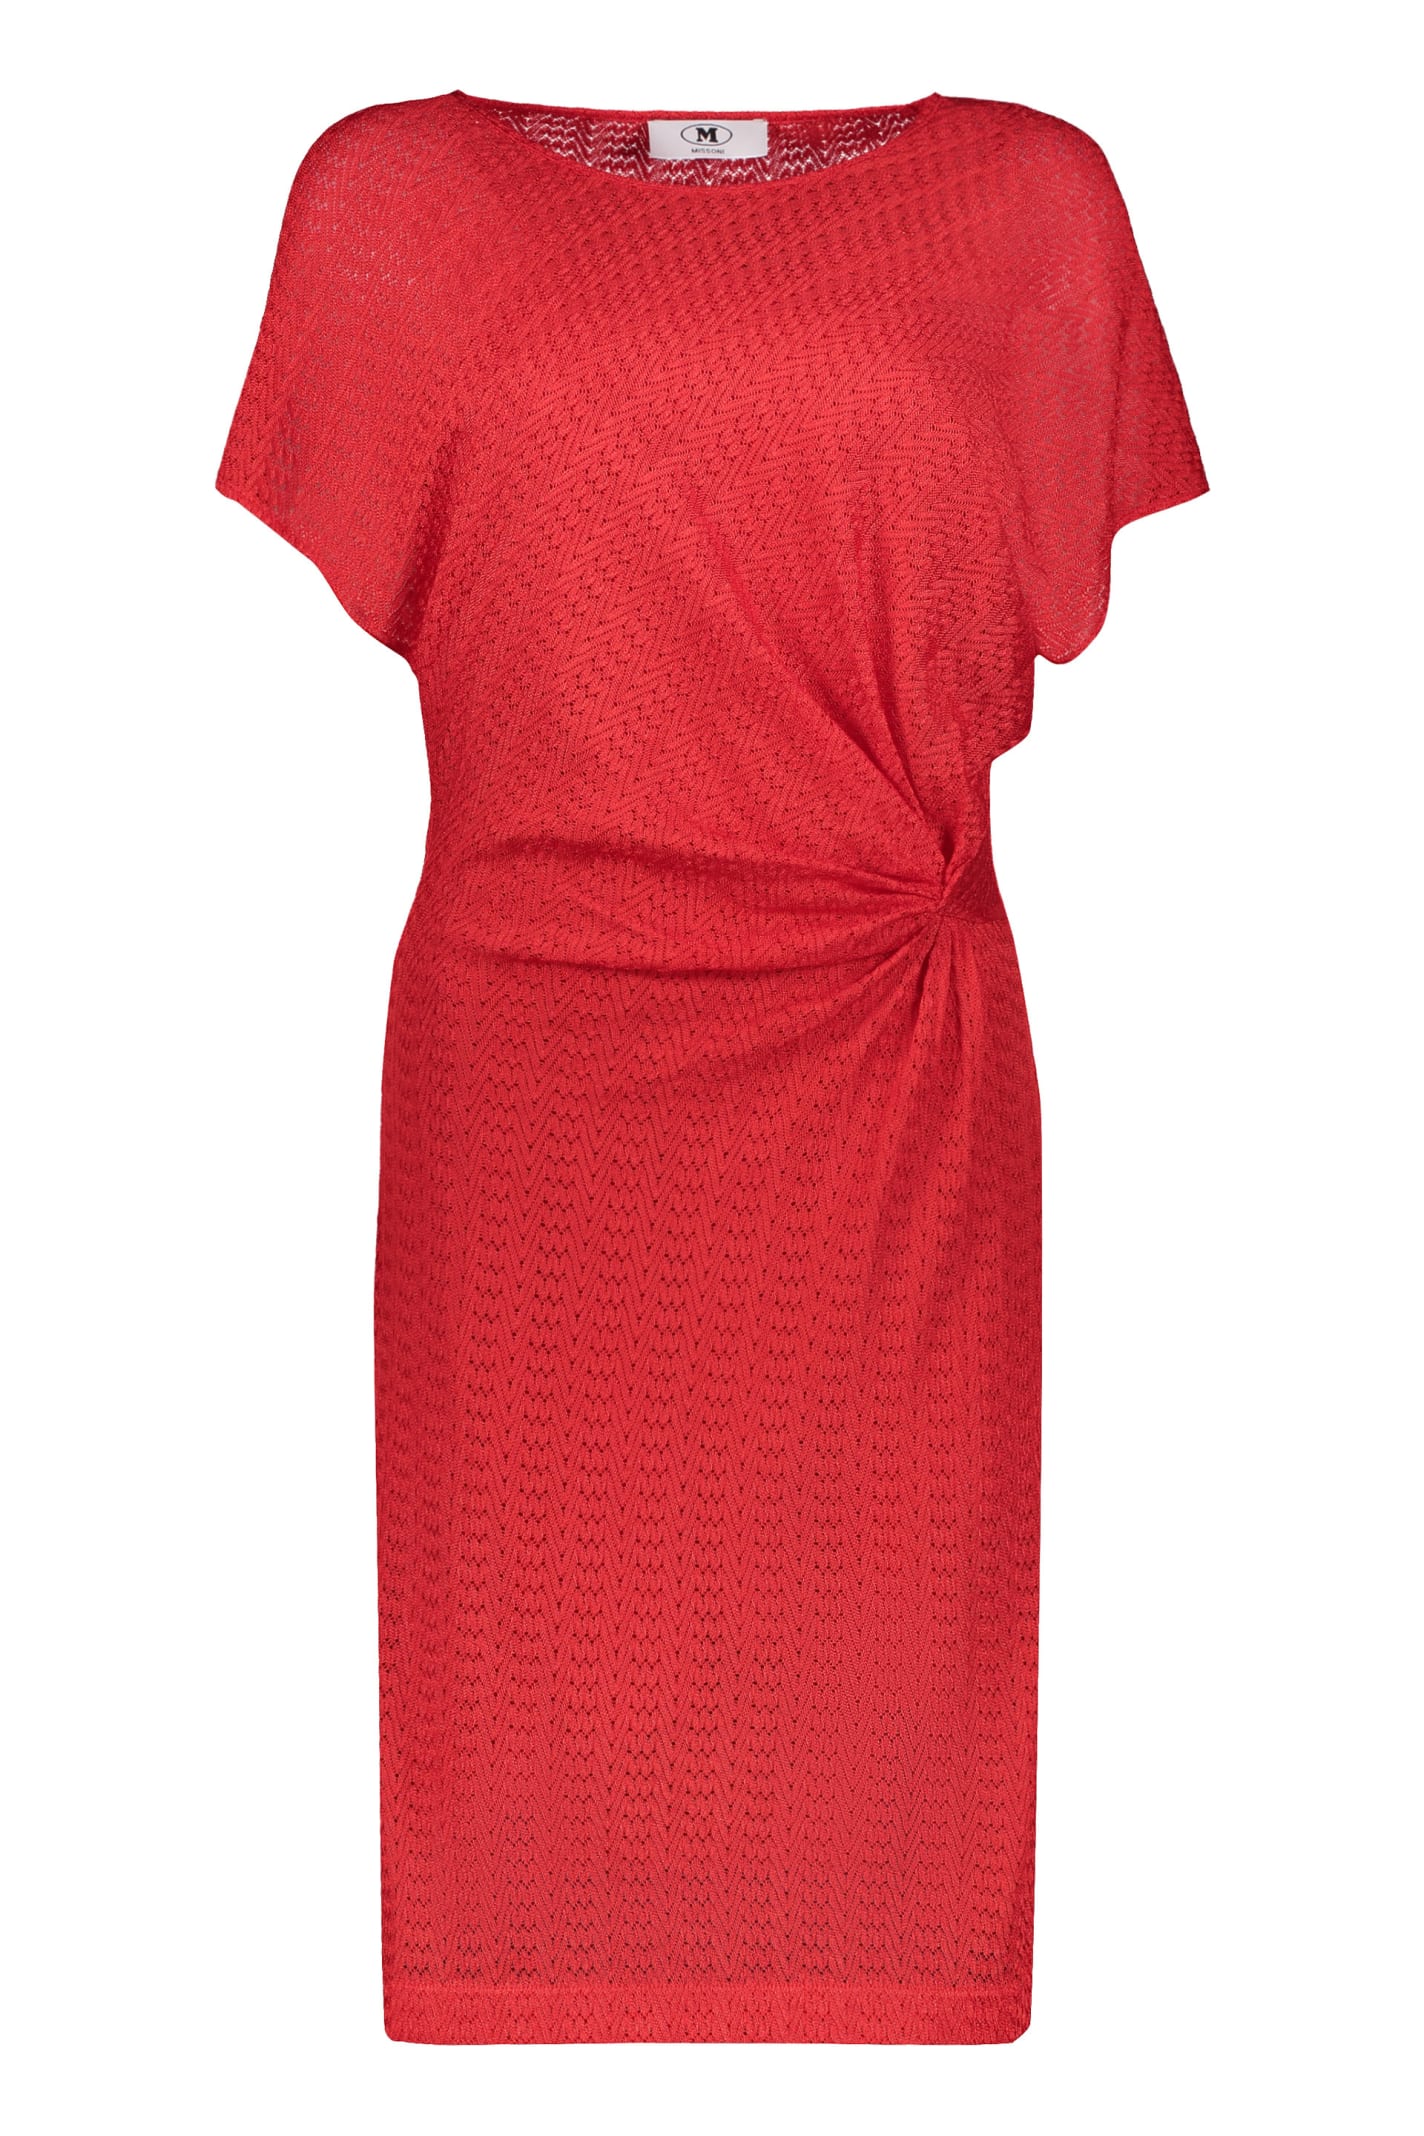 Missoni Viscose Dress In Red